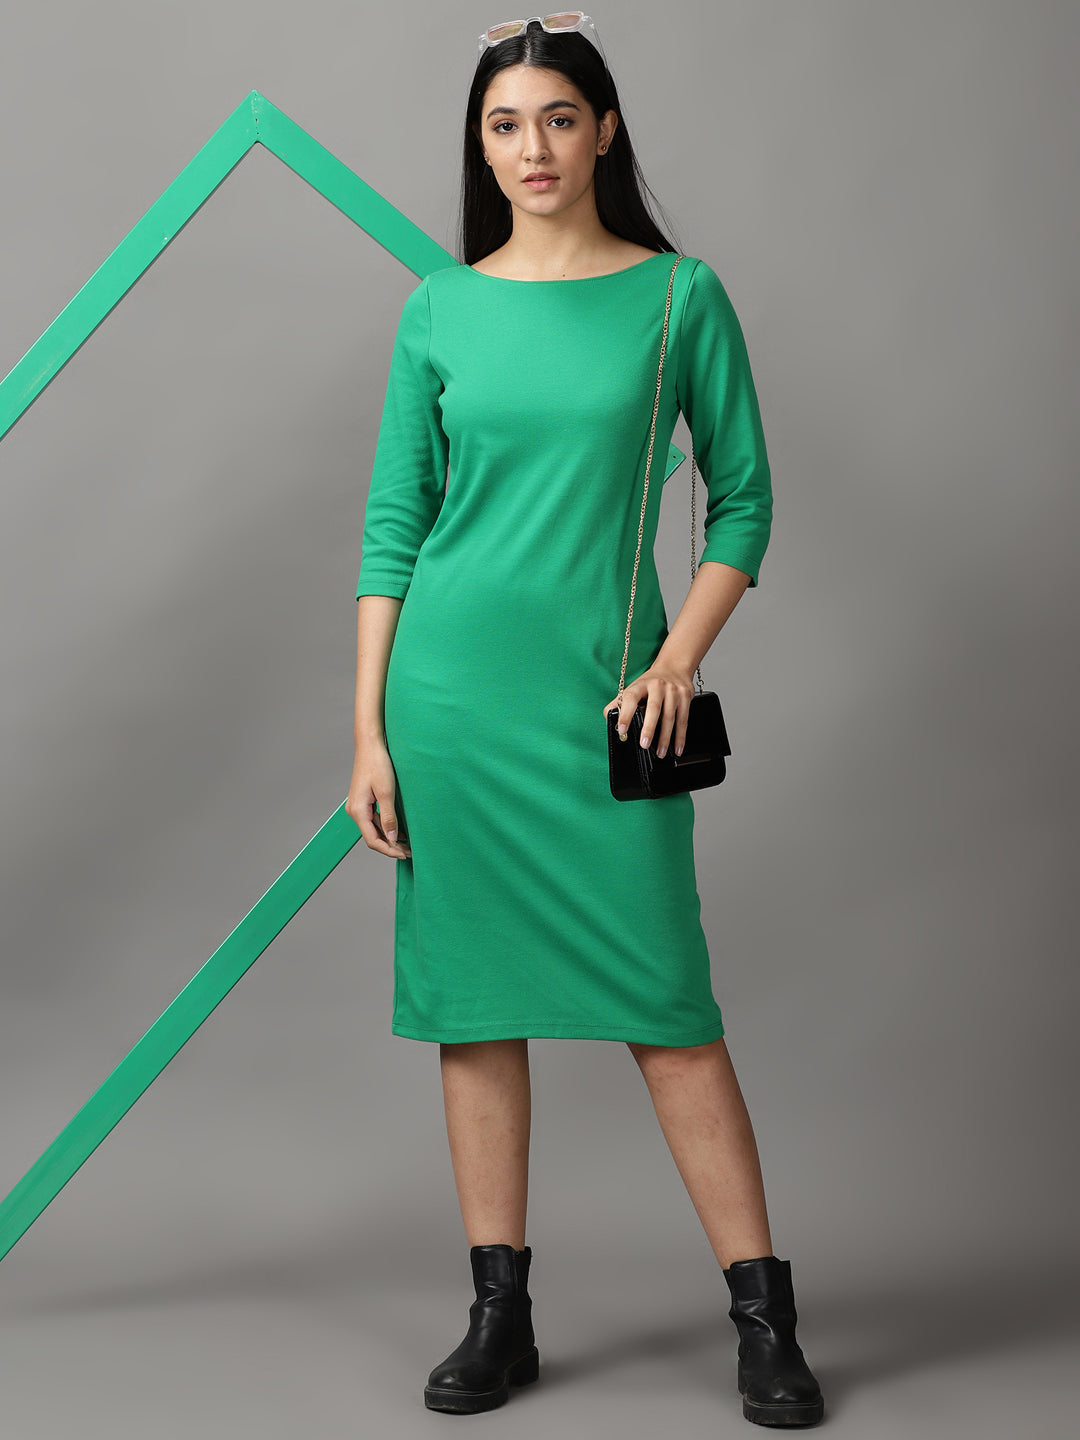 Women's Green Solid Bodycon Dress